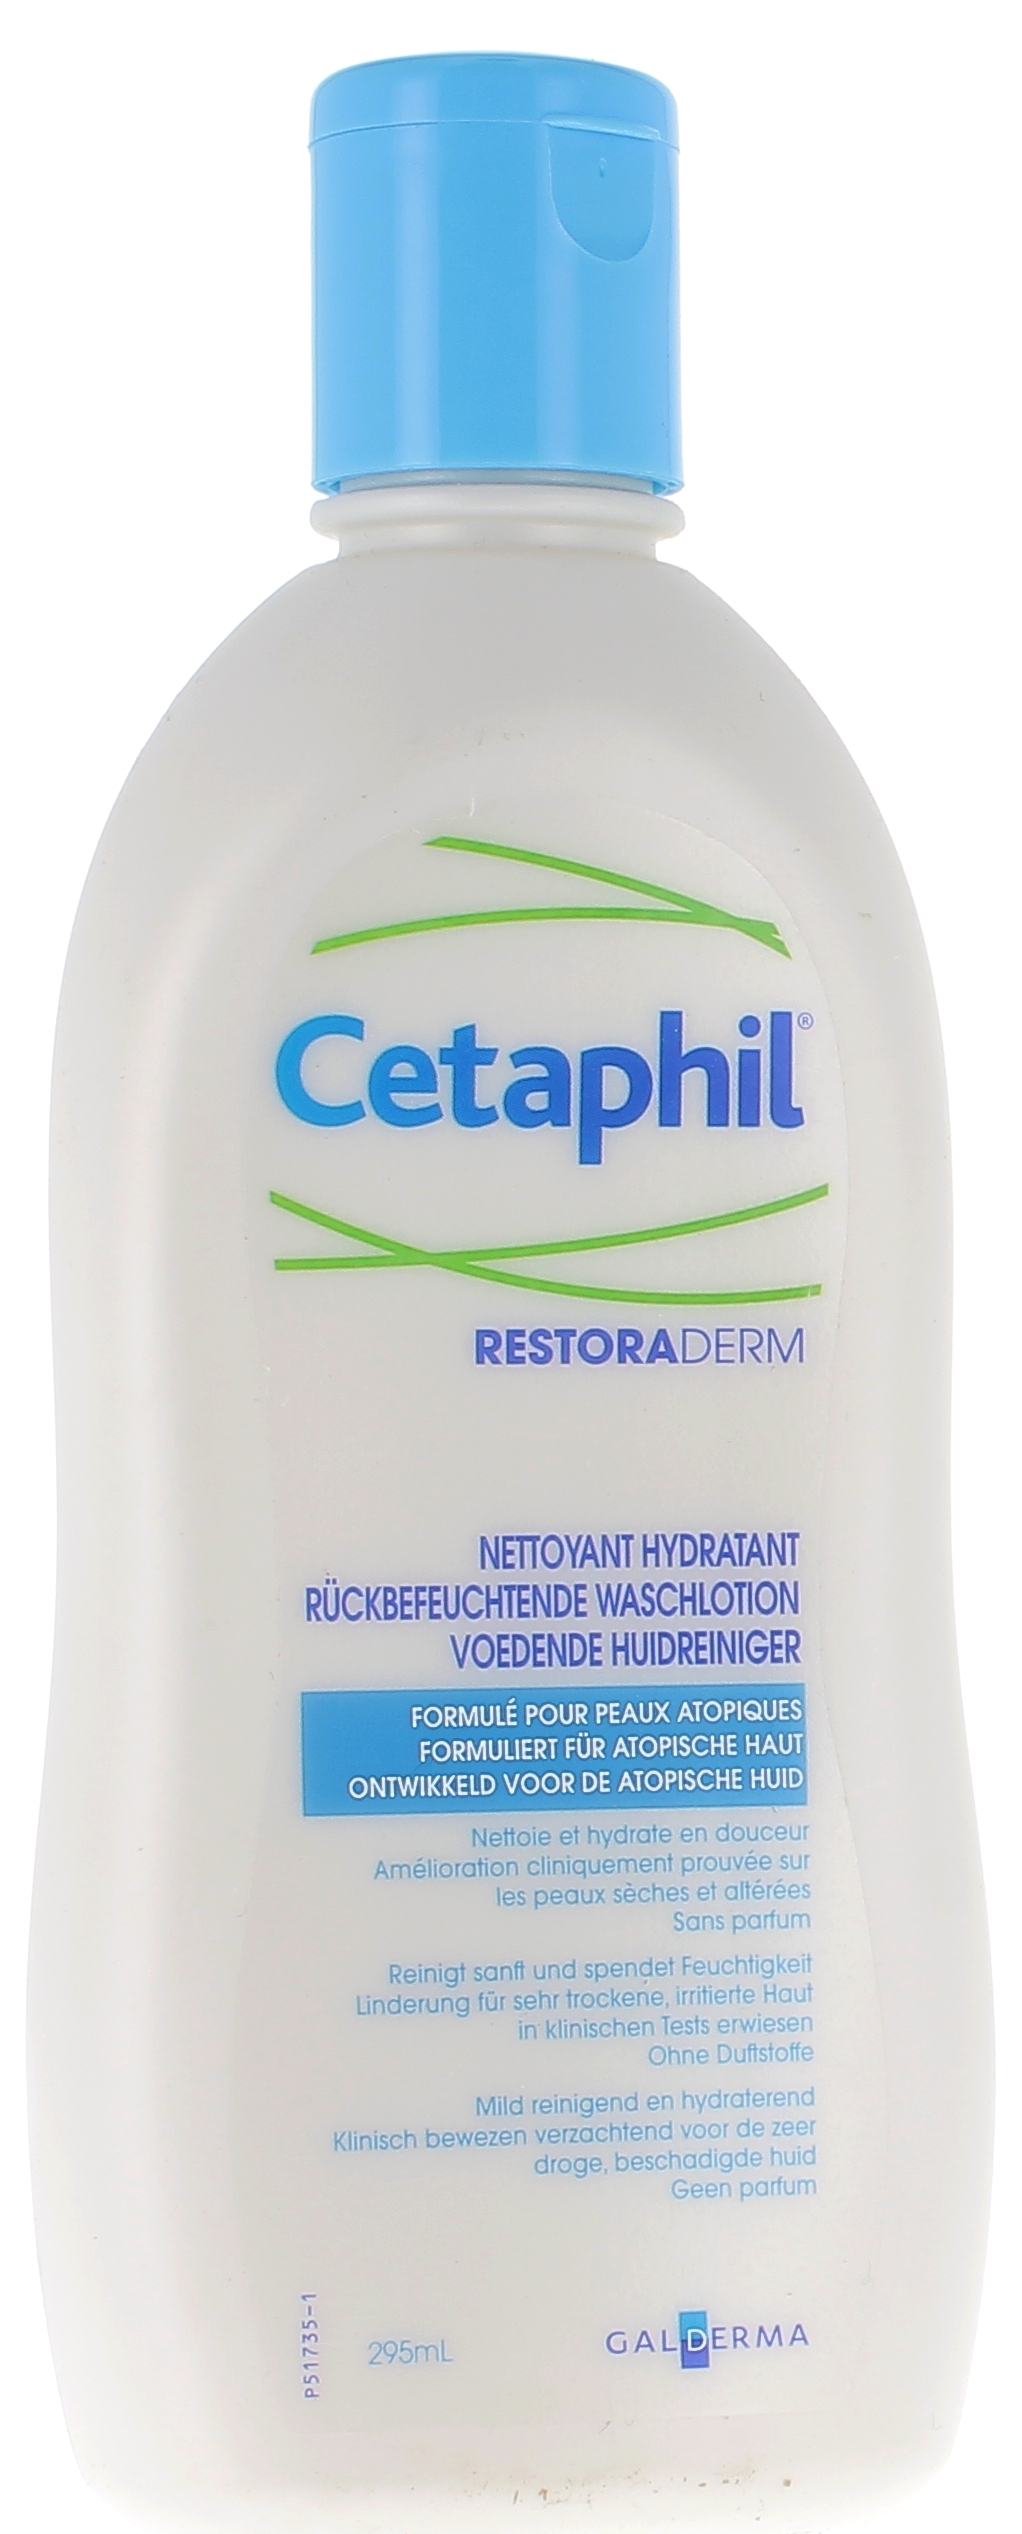 Restoraderm nettoyant hydratant Cetaphil - flacon de 295 ml